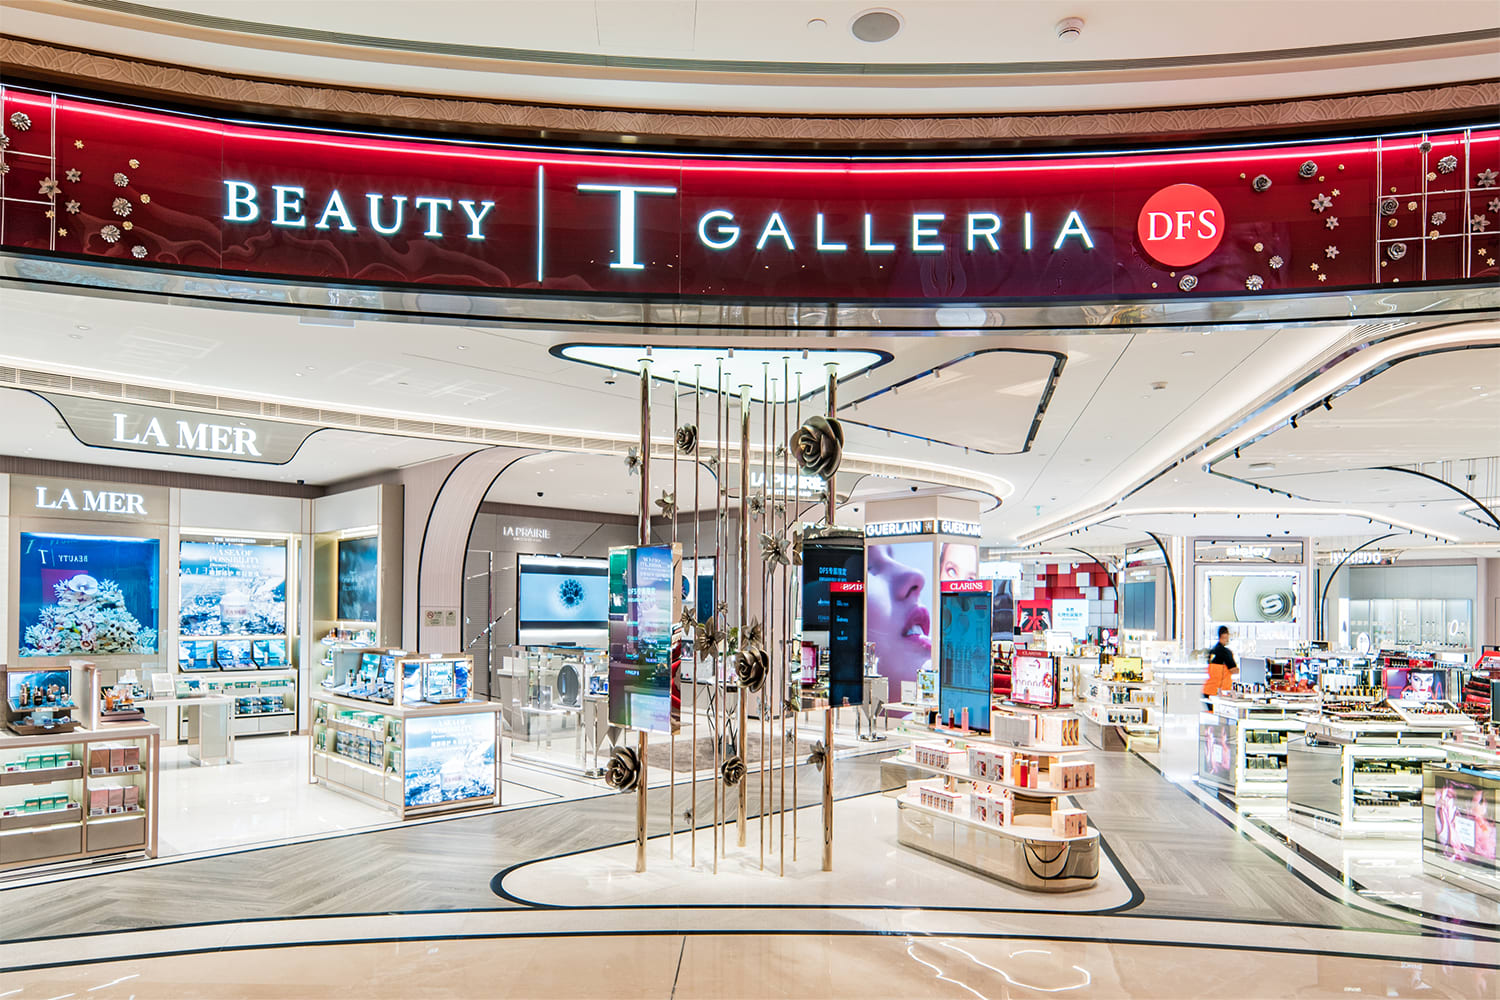 DFS T Galleria Four Seasons Beauty Hall - Retail / Jeffrey